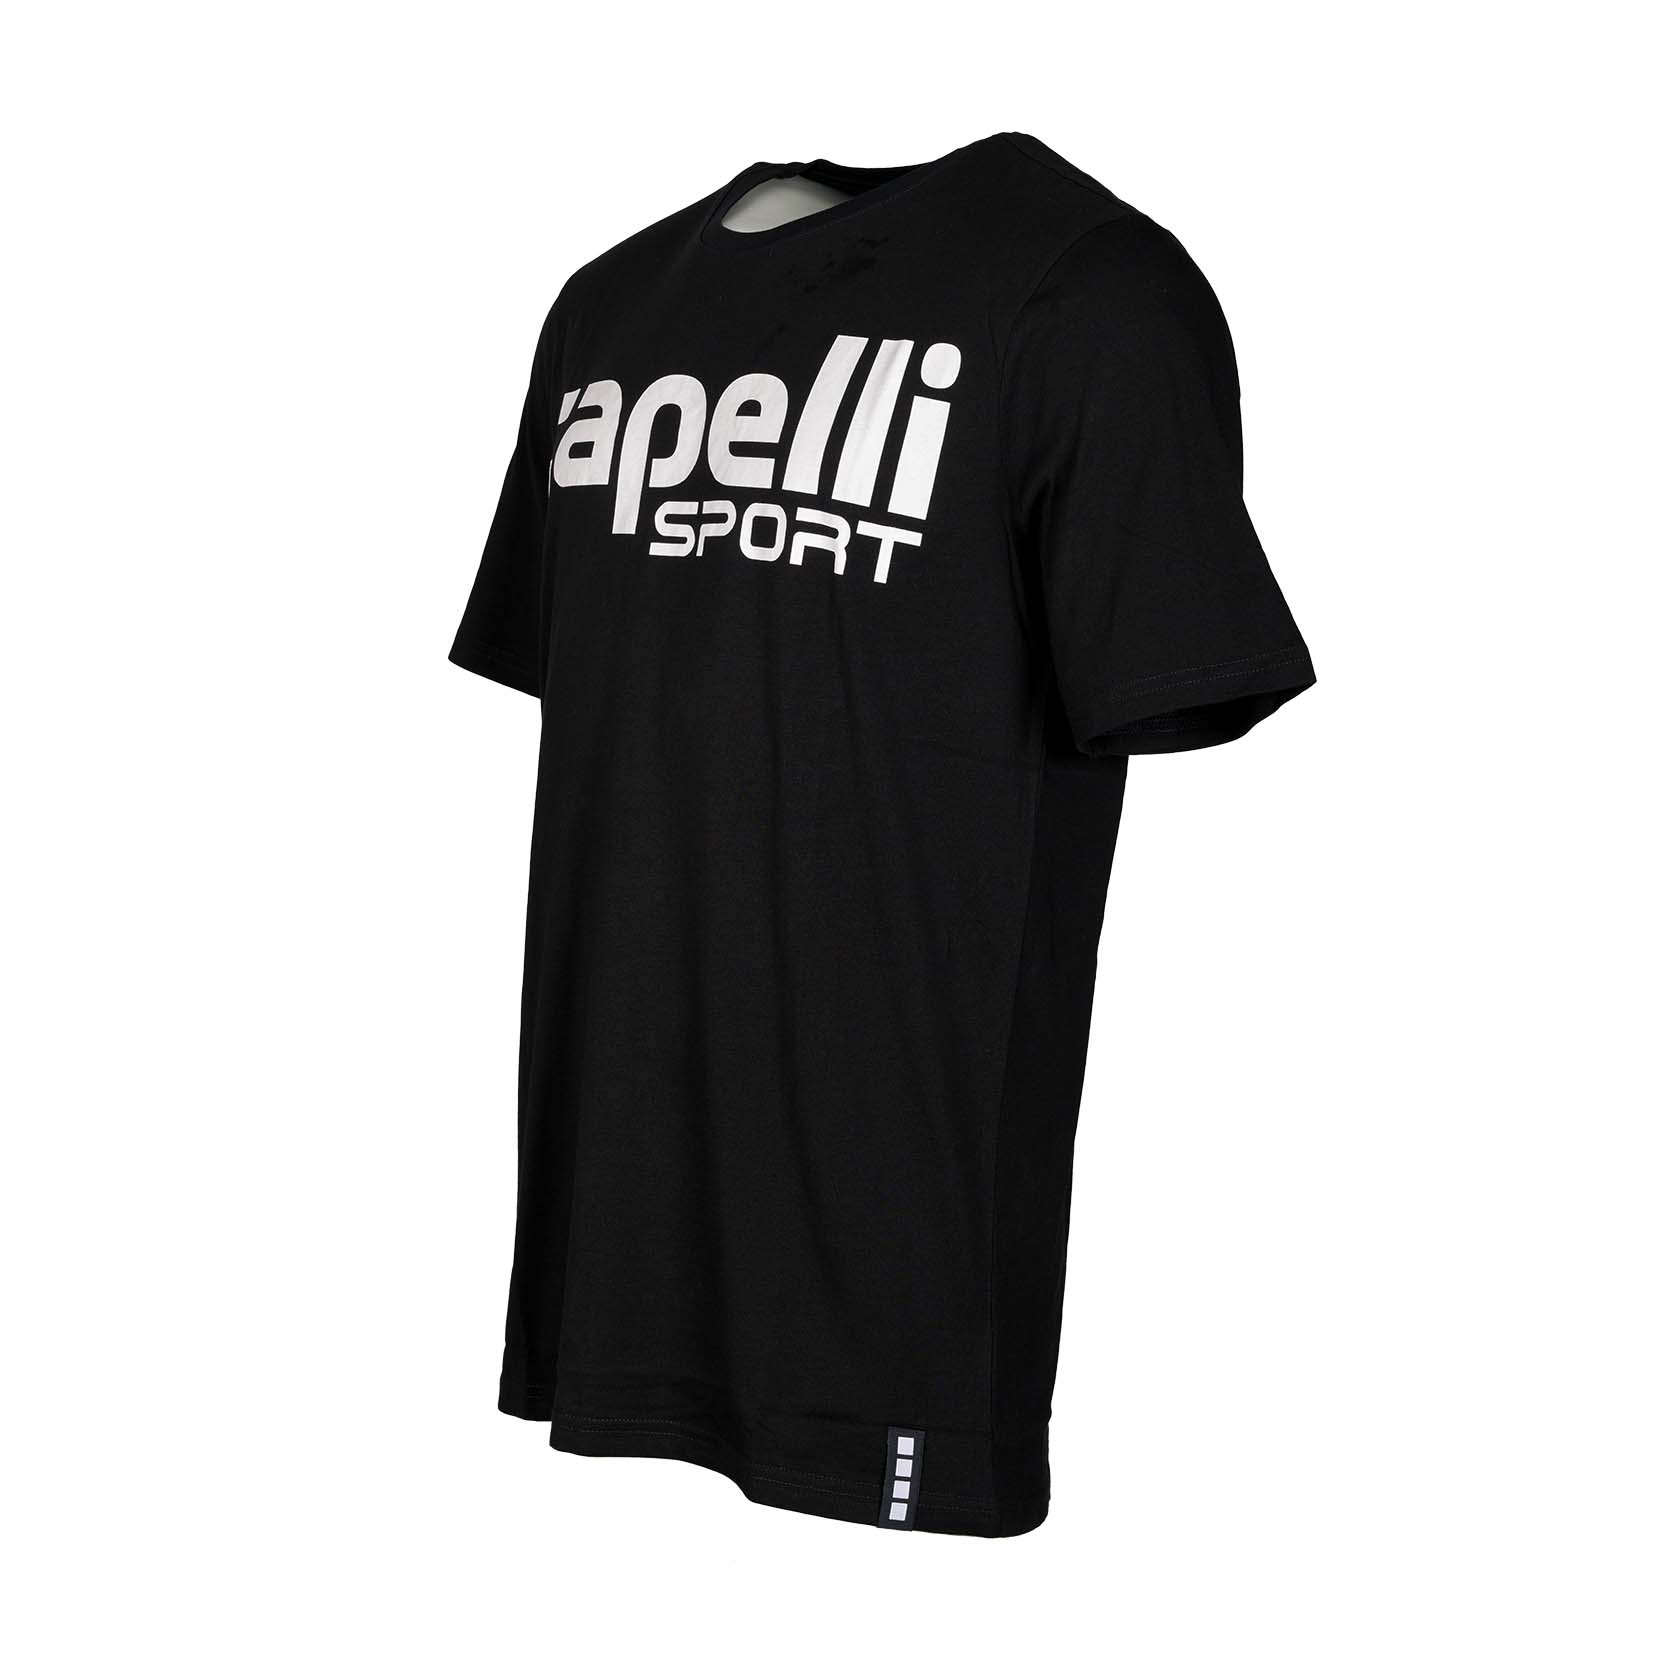 Capelli Sport Logo Tee Børn